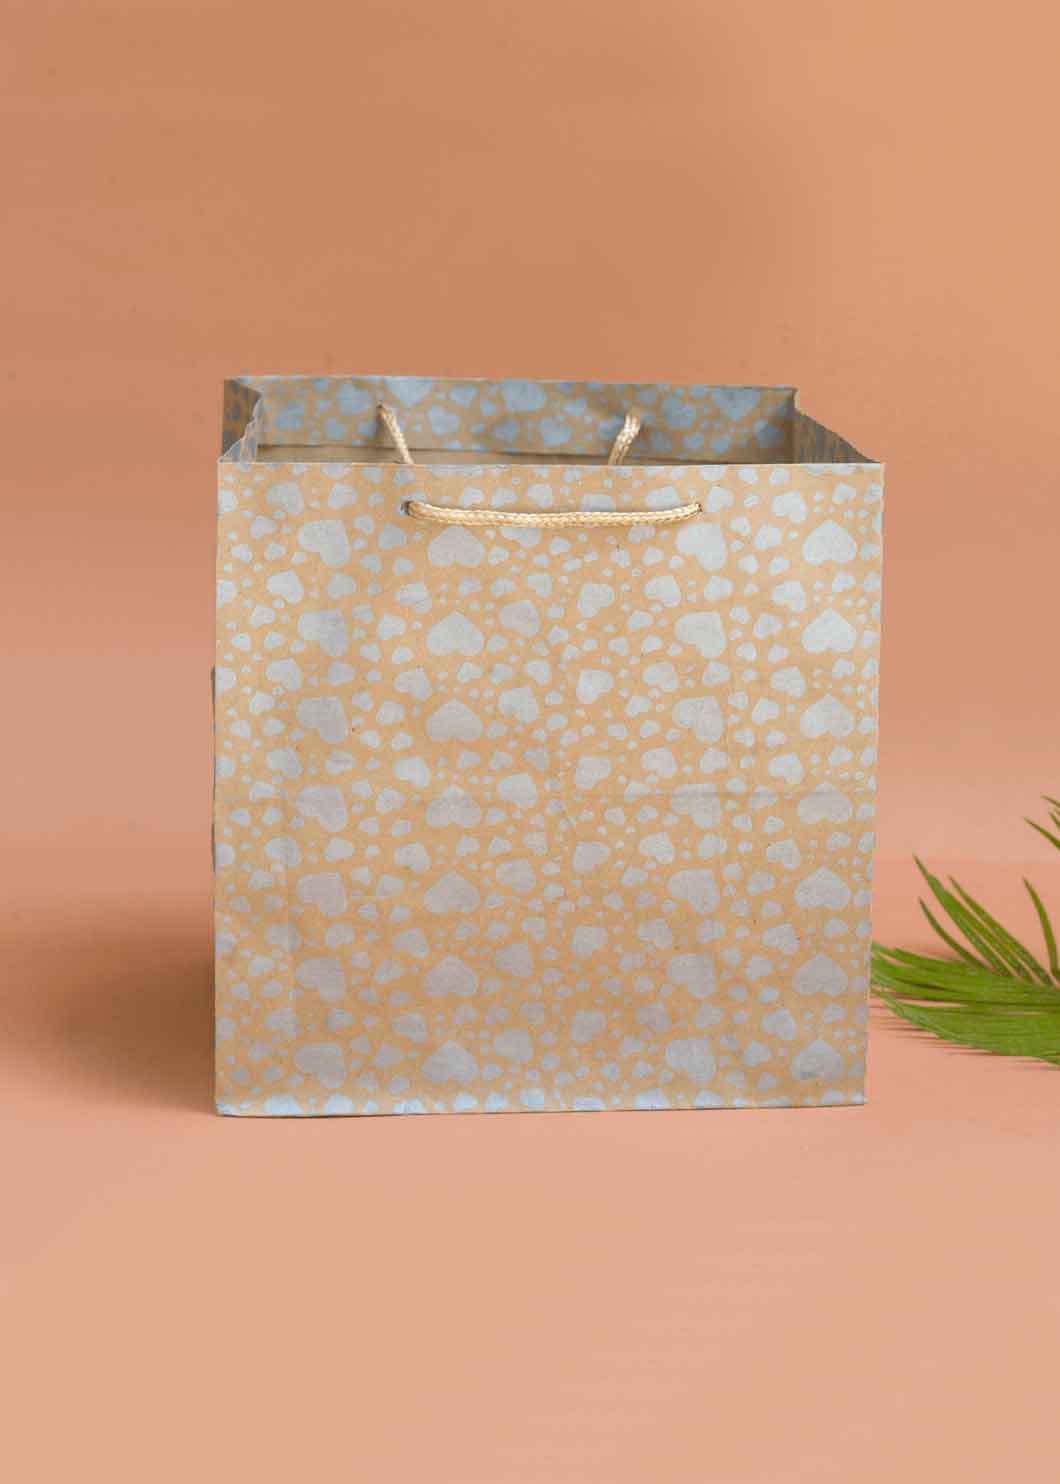 Craft Paper Bag - Heart Pattern Design Square Paper Bag For Multupupose Packaging